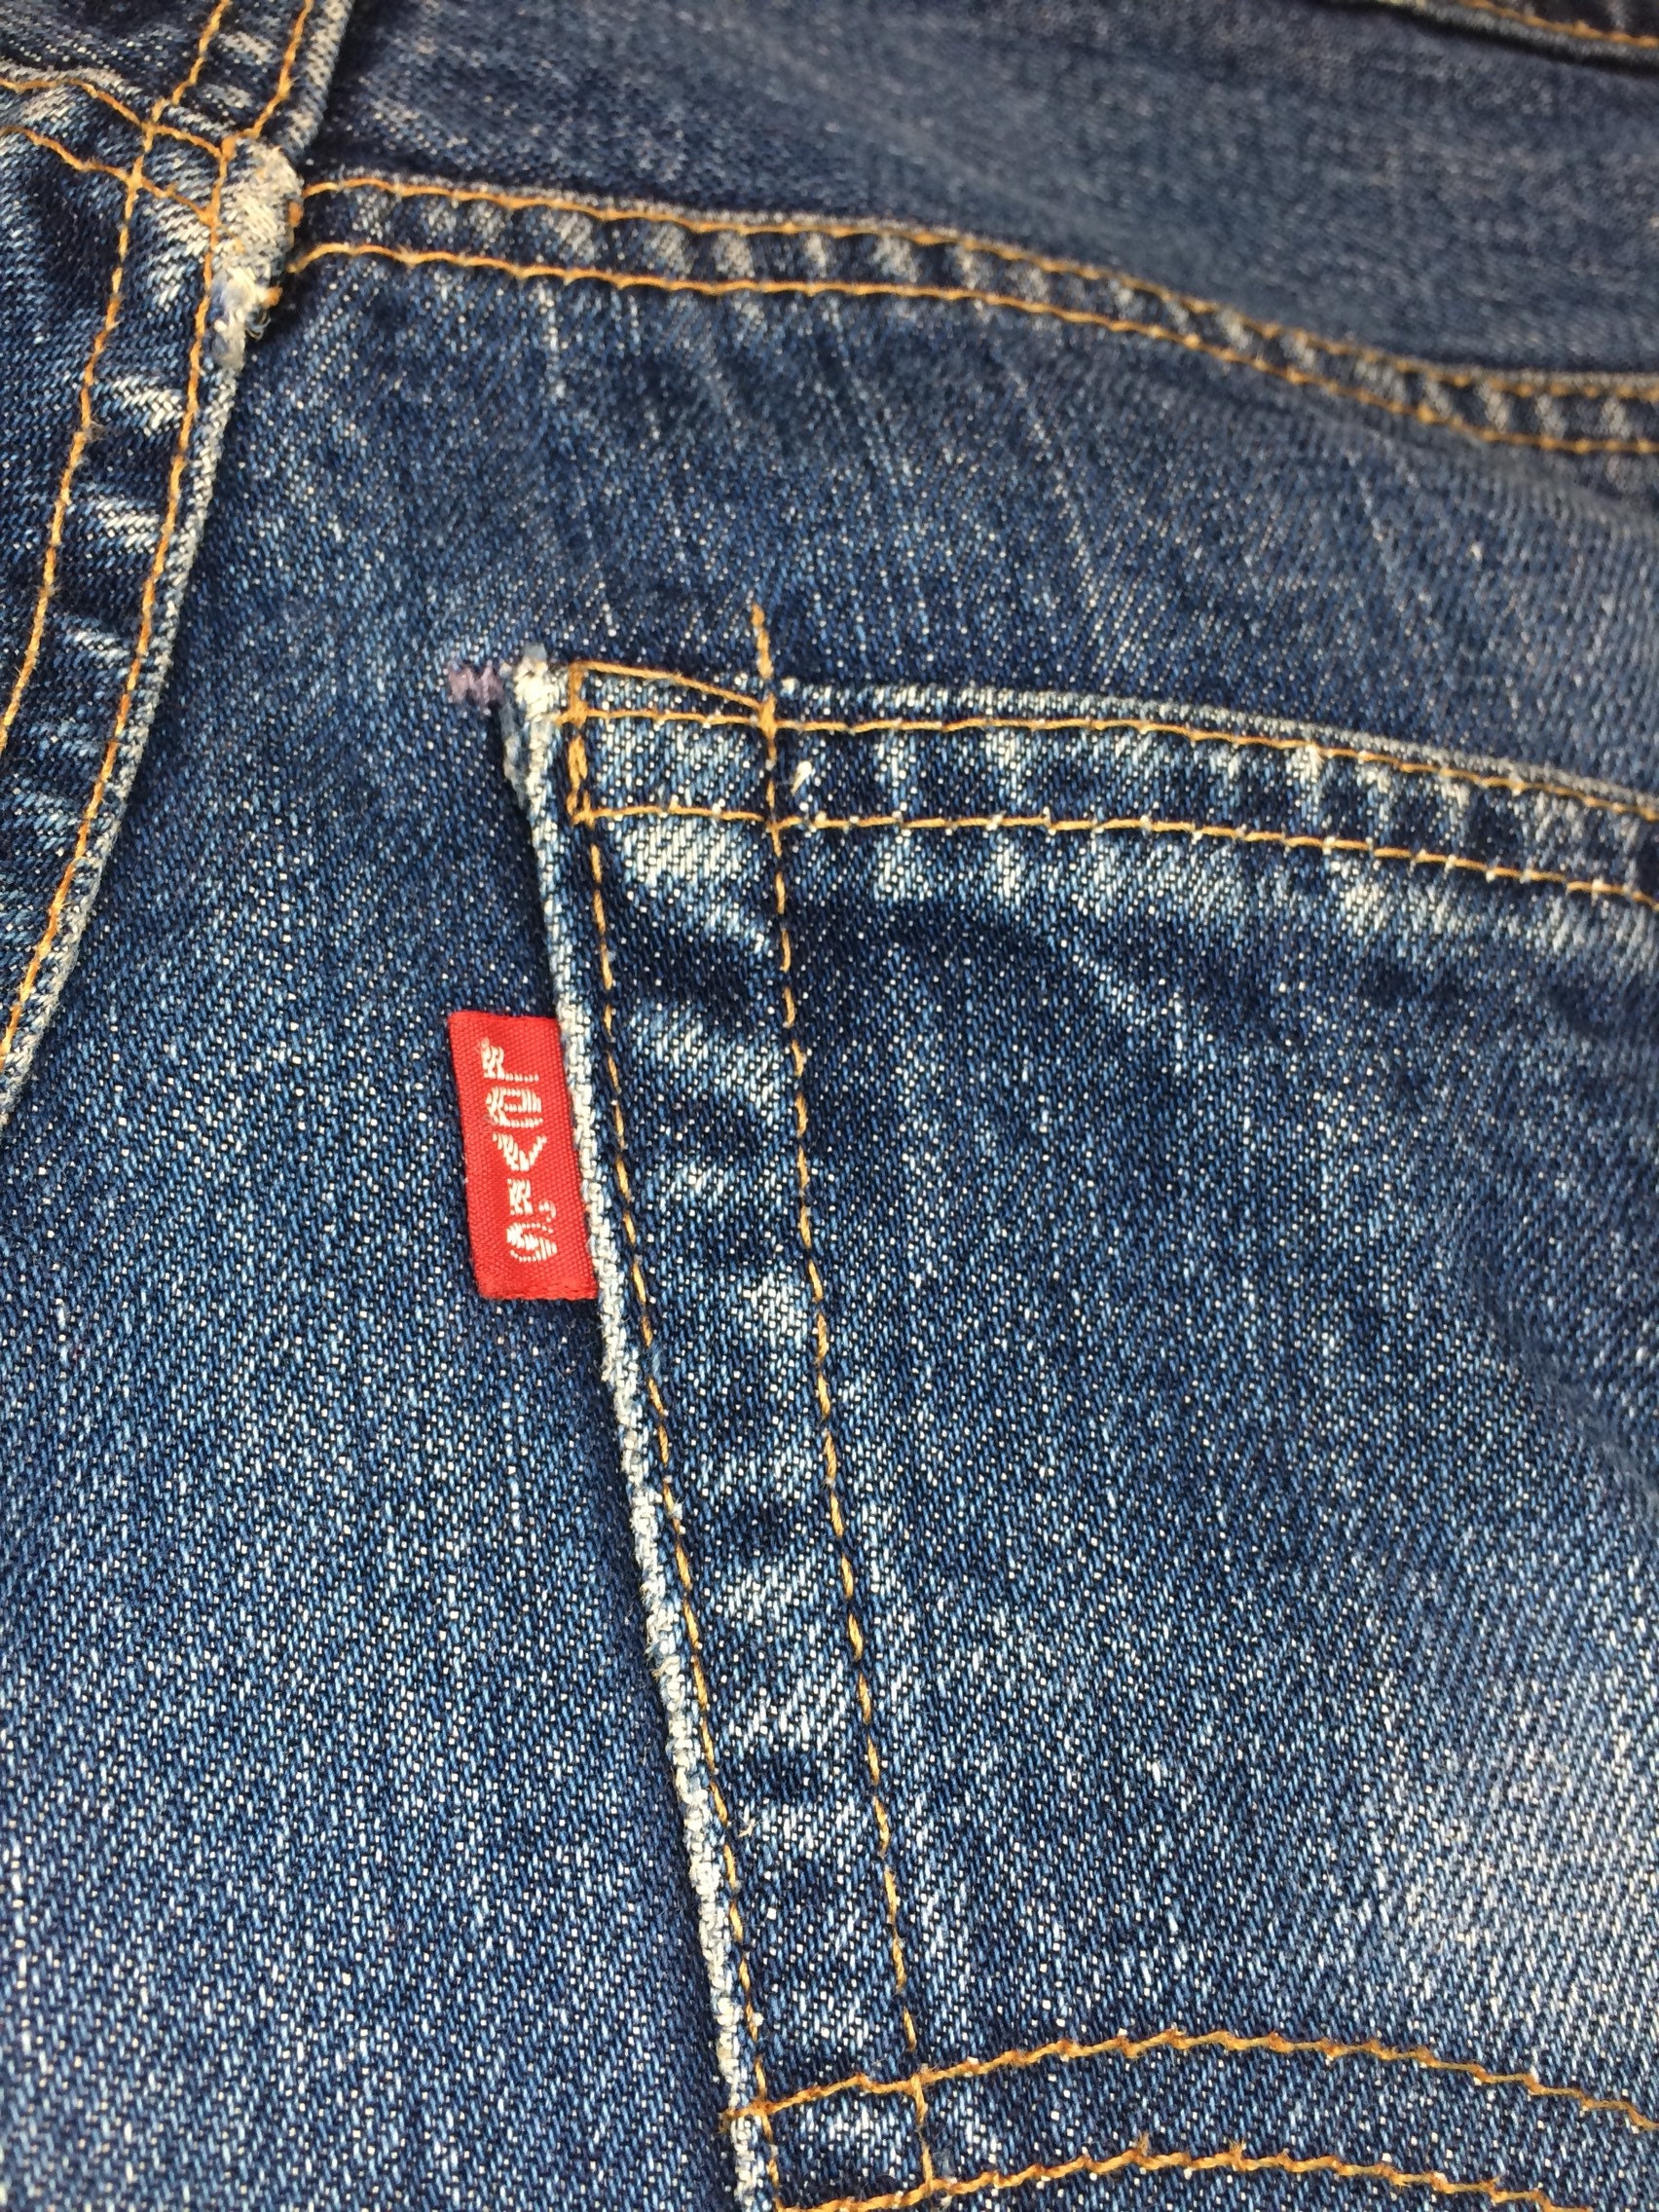 1970s Levis 505 indigo blue denim jeans made in USA measures 31x27 ...